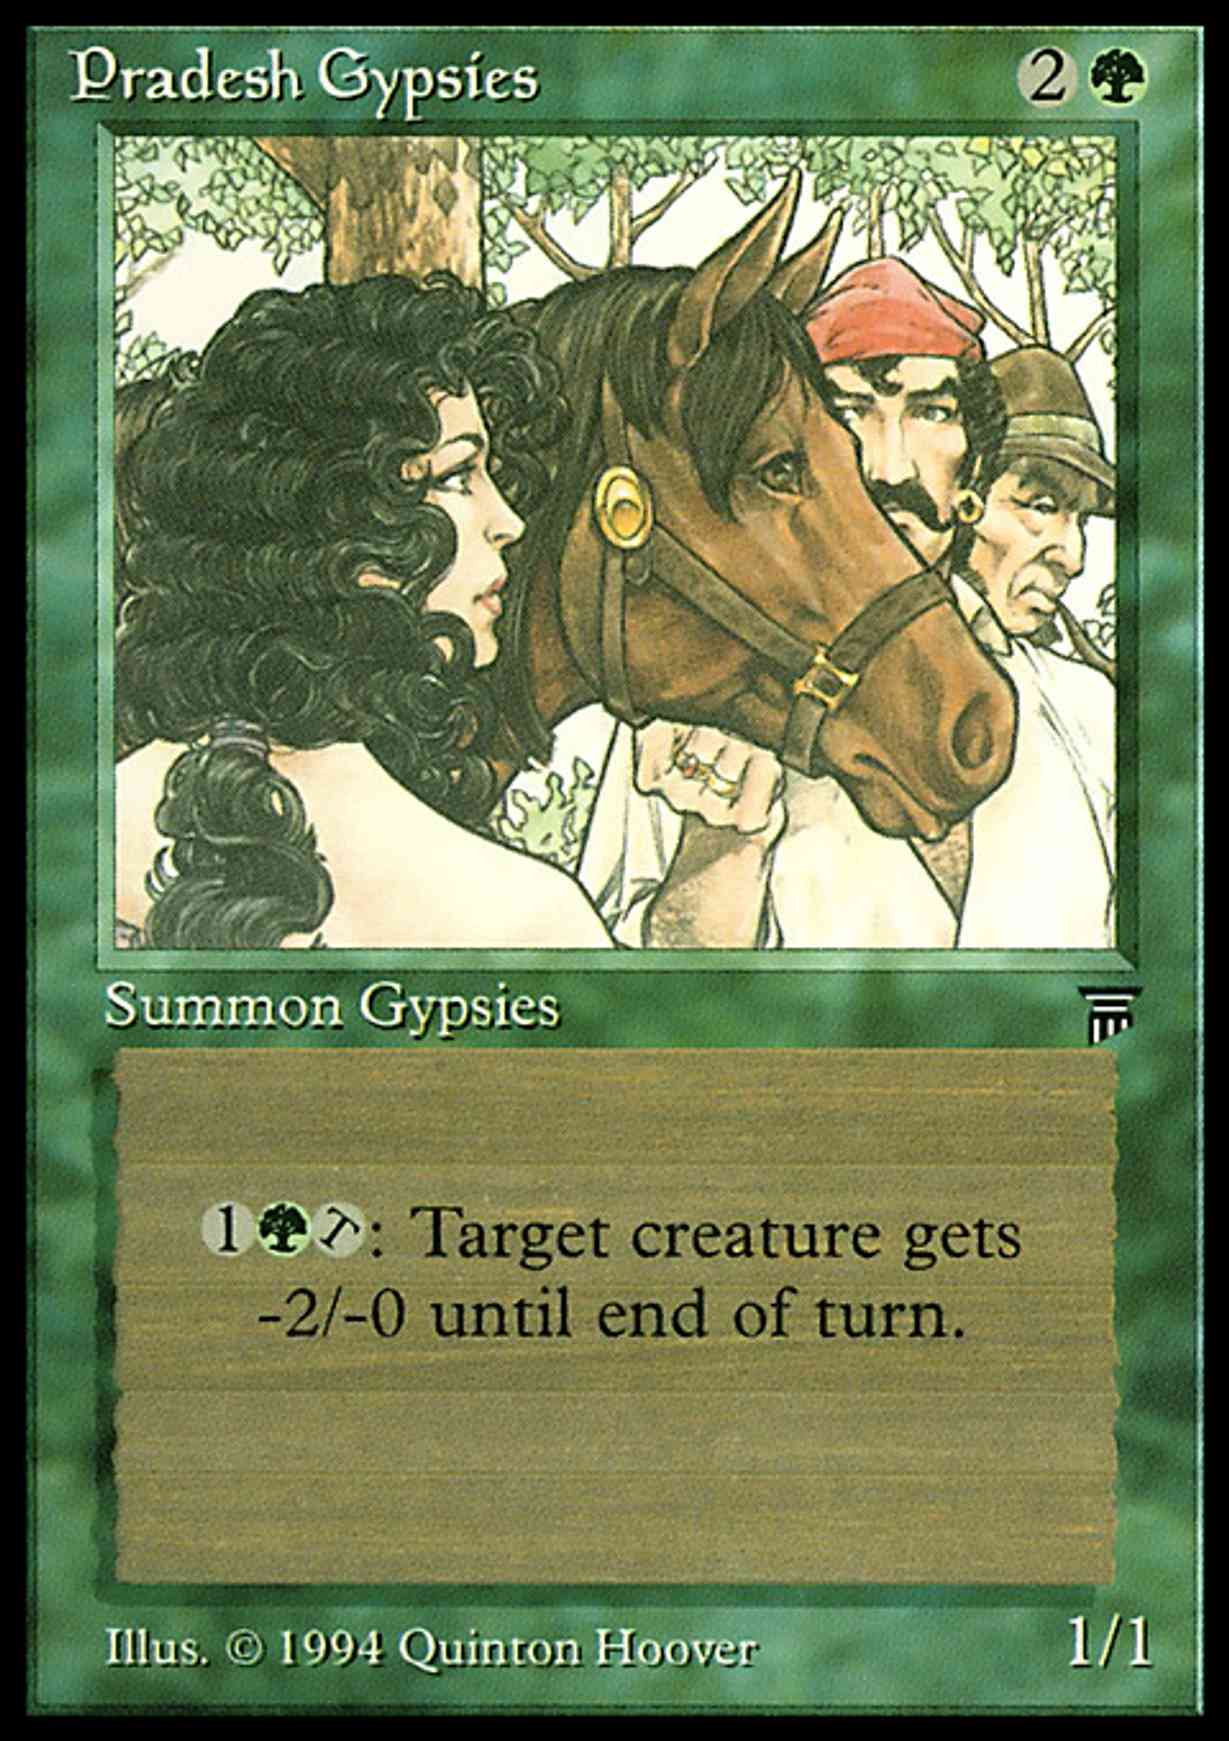 Pradesh Gypsies magic card front